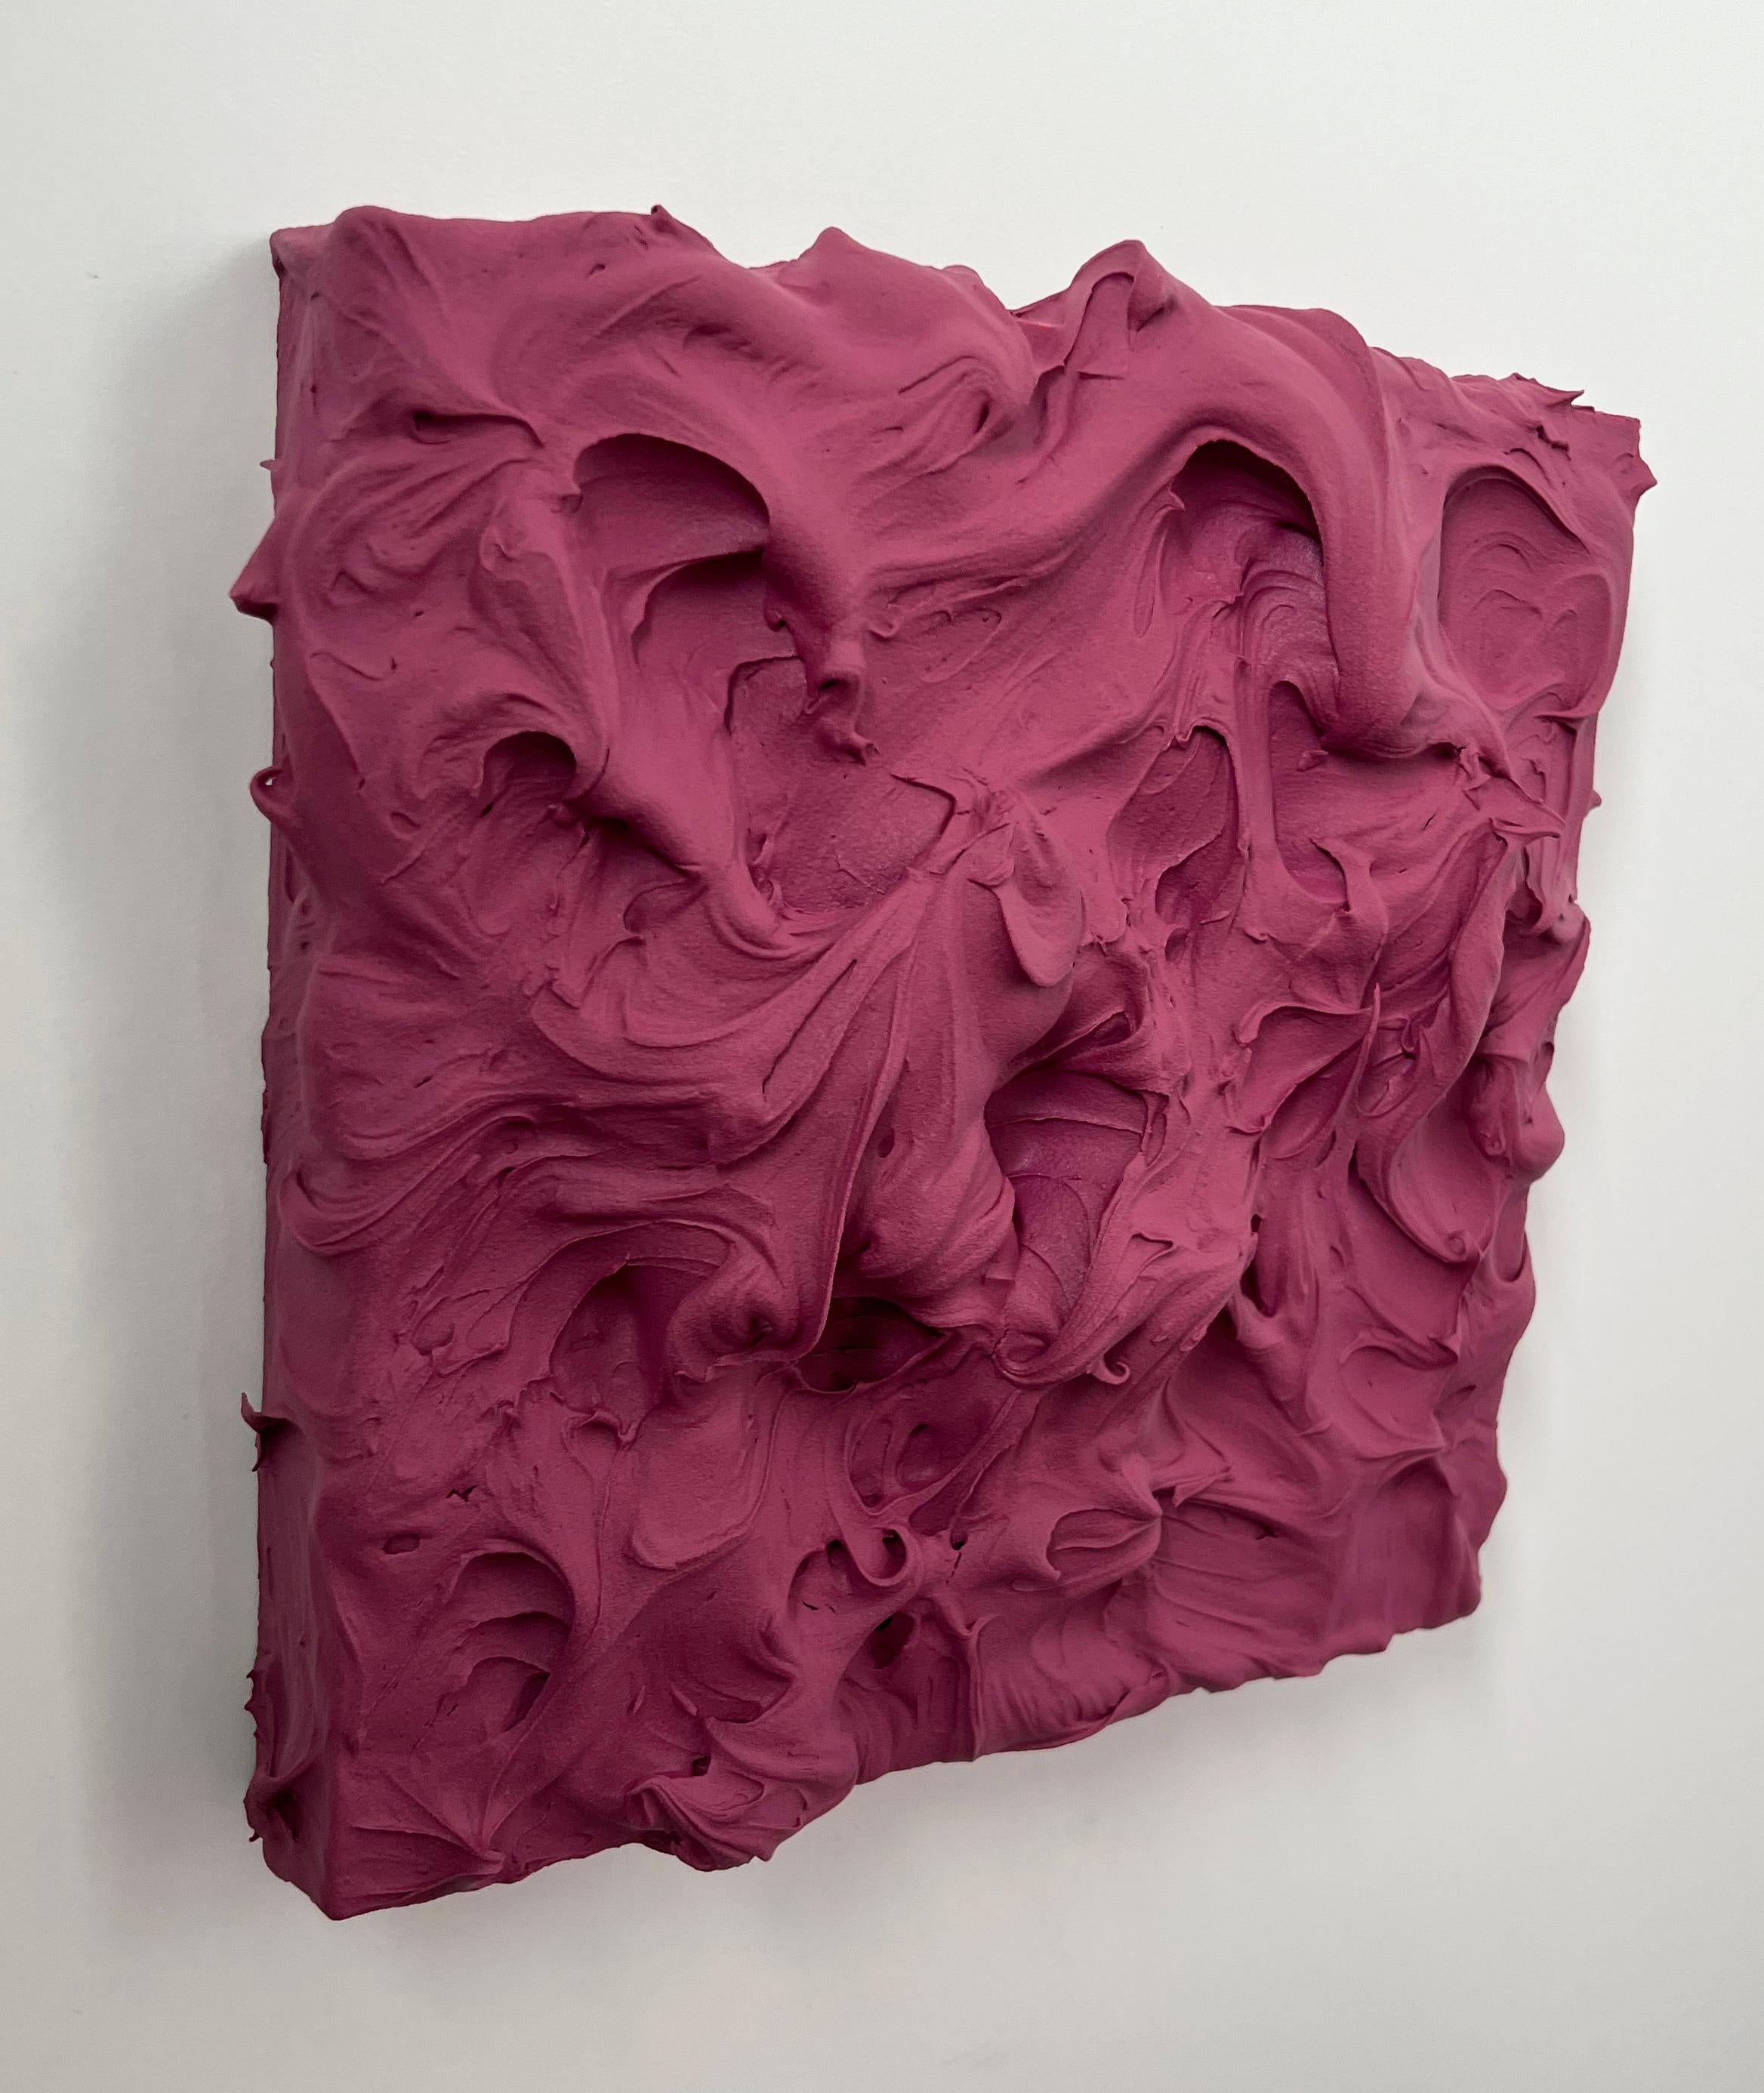 Mauve Excess (purple impasto thick painting monochrome pop art square design) - Pop Art Painting by Chloe Hedden